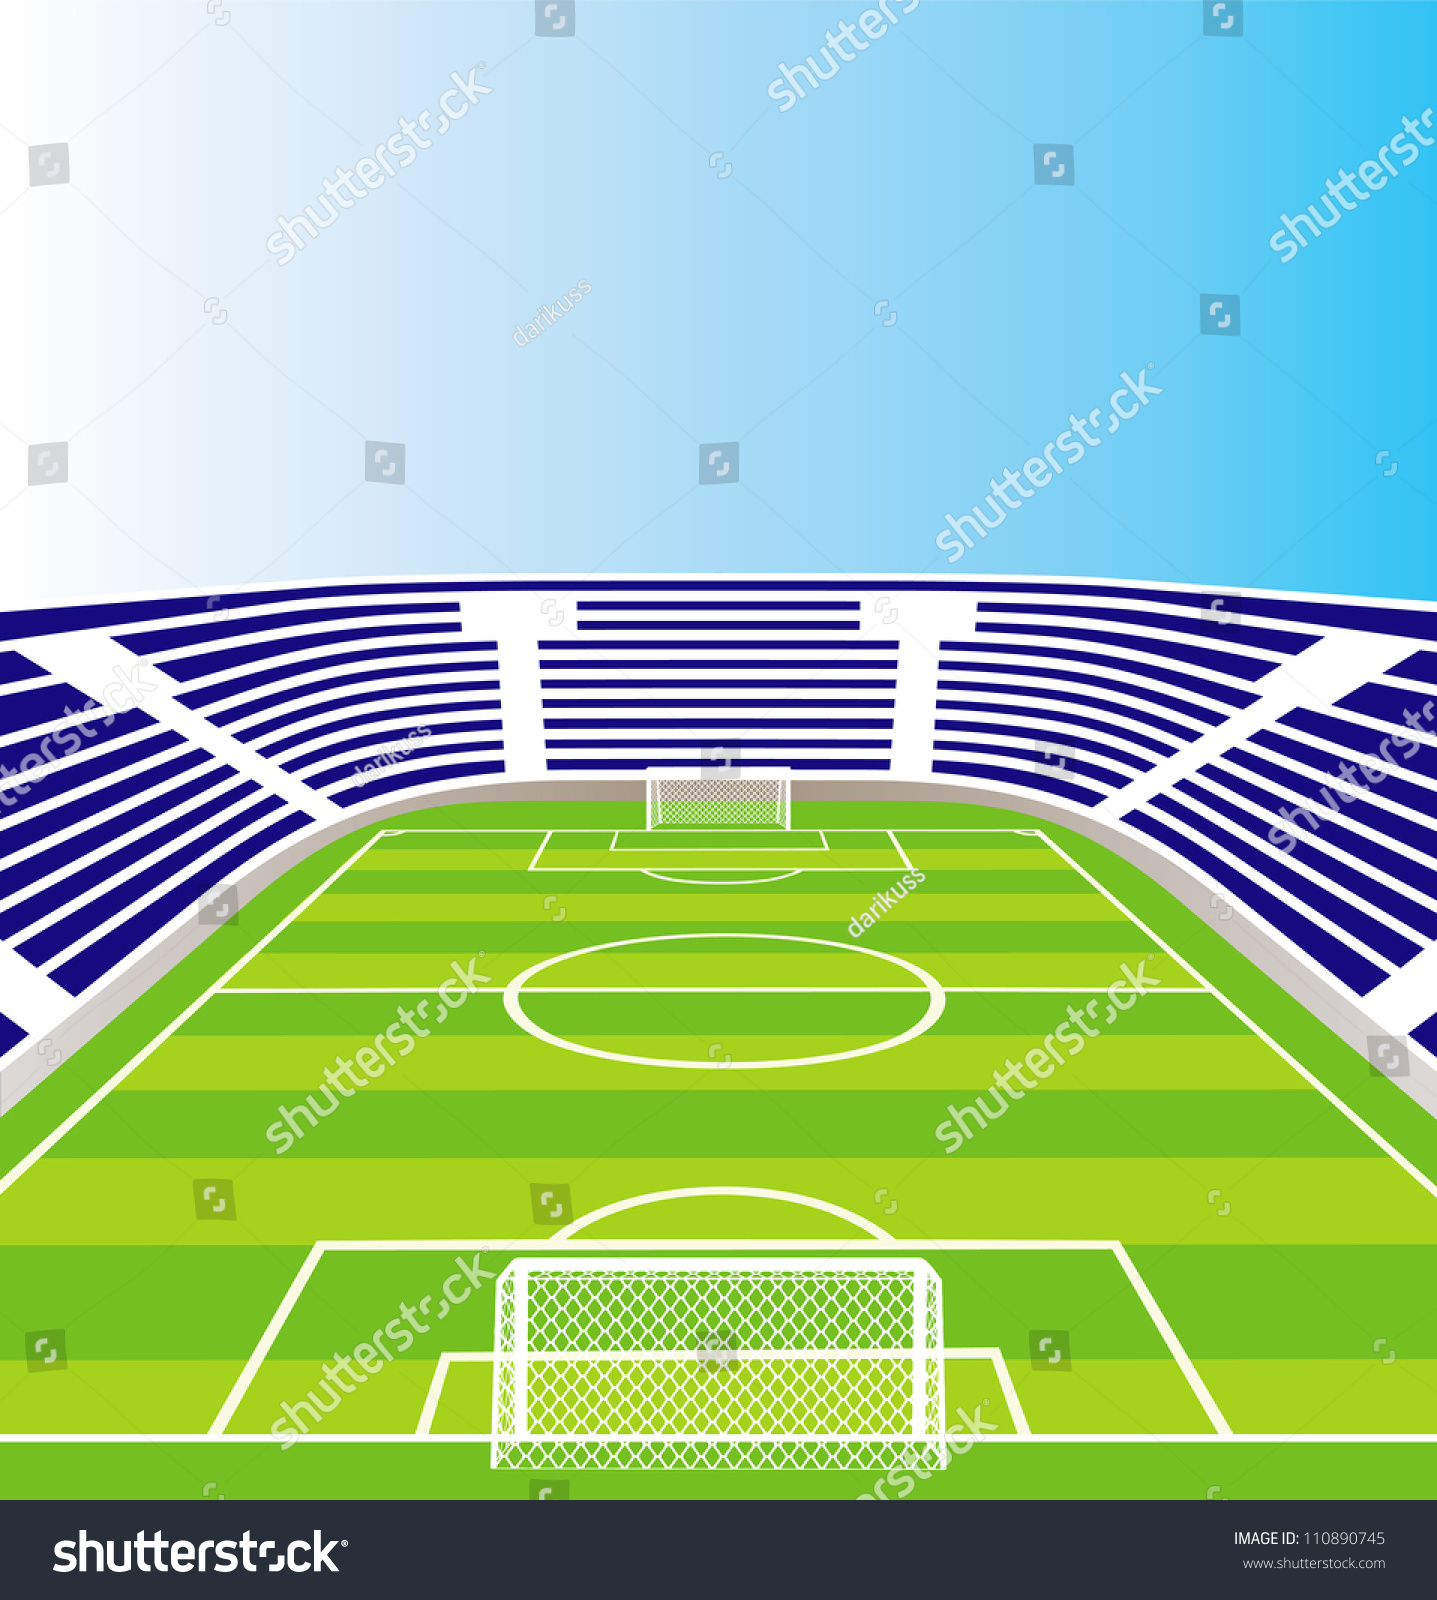 Soccer Stadium Stock Vector (Royalty Free) 110890745 - Shutterstock